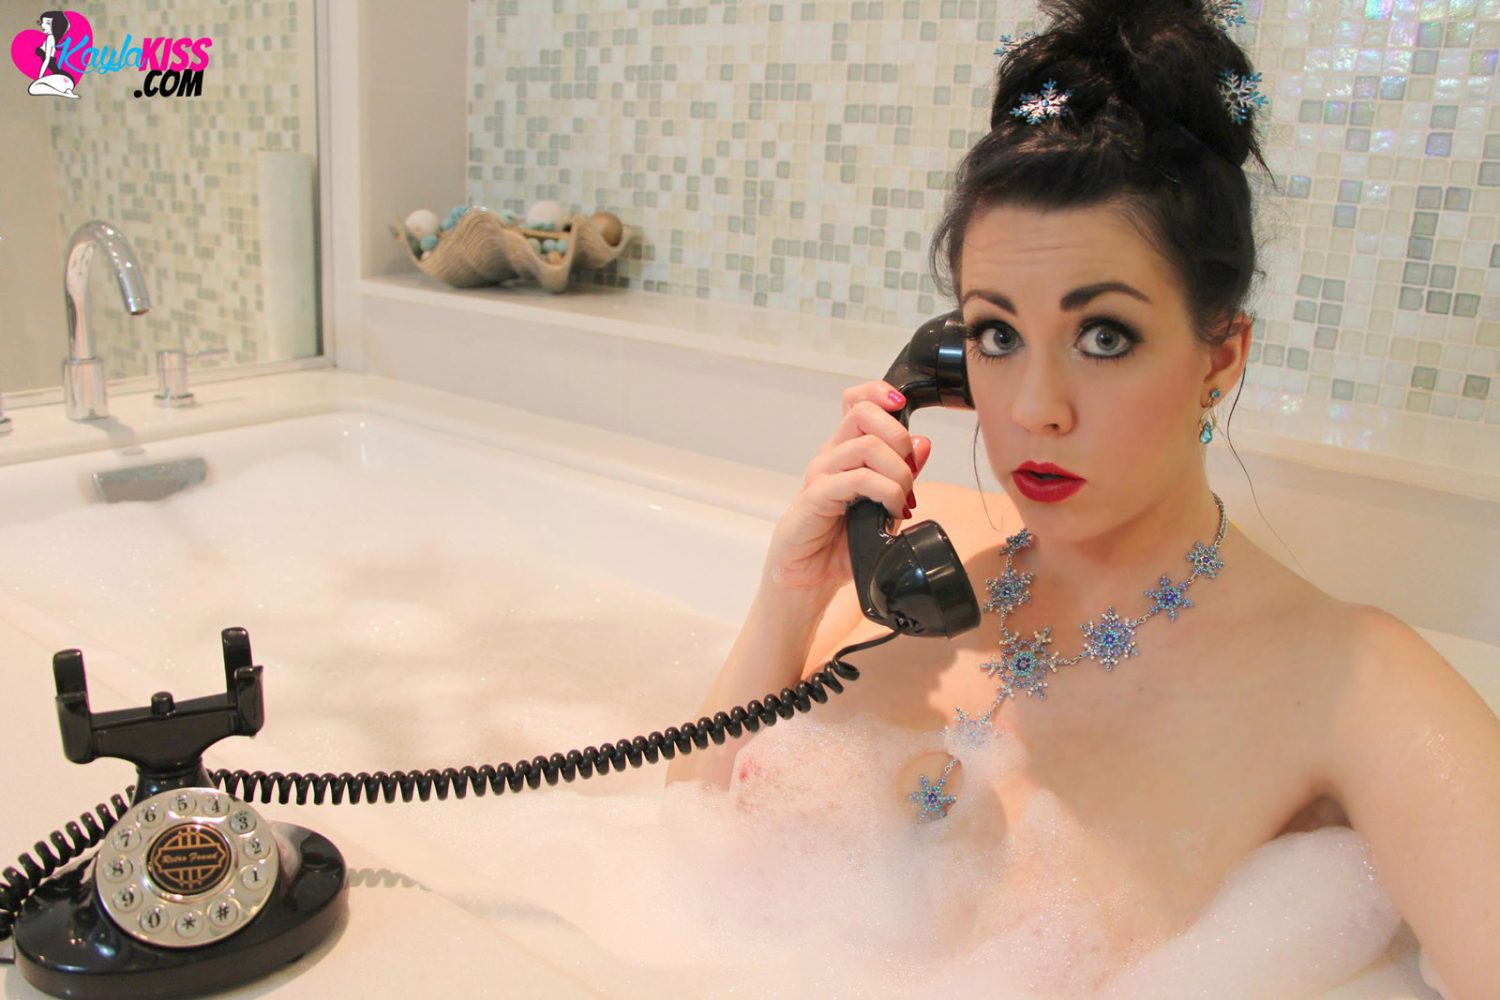 Kayla Kiss in Bath Tub Nudes